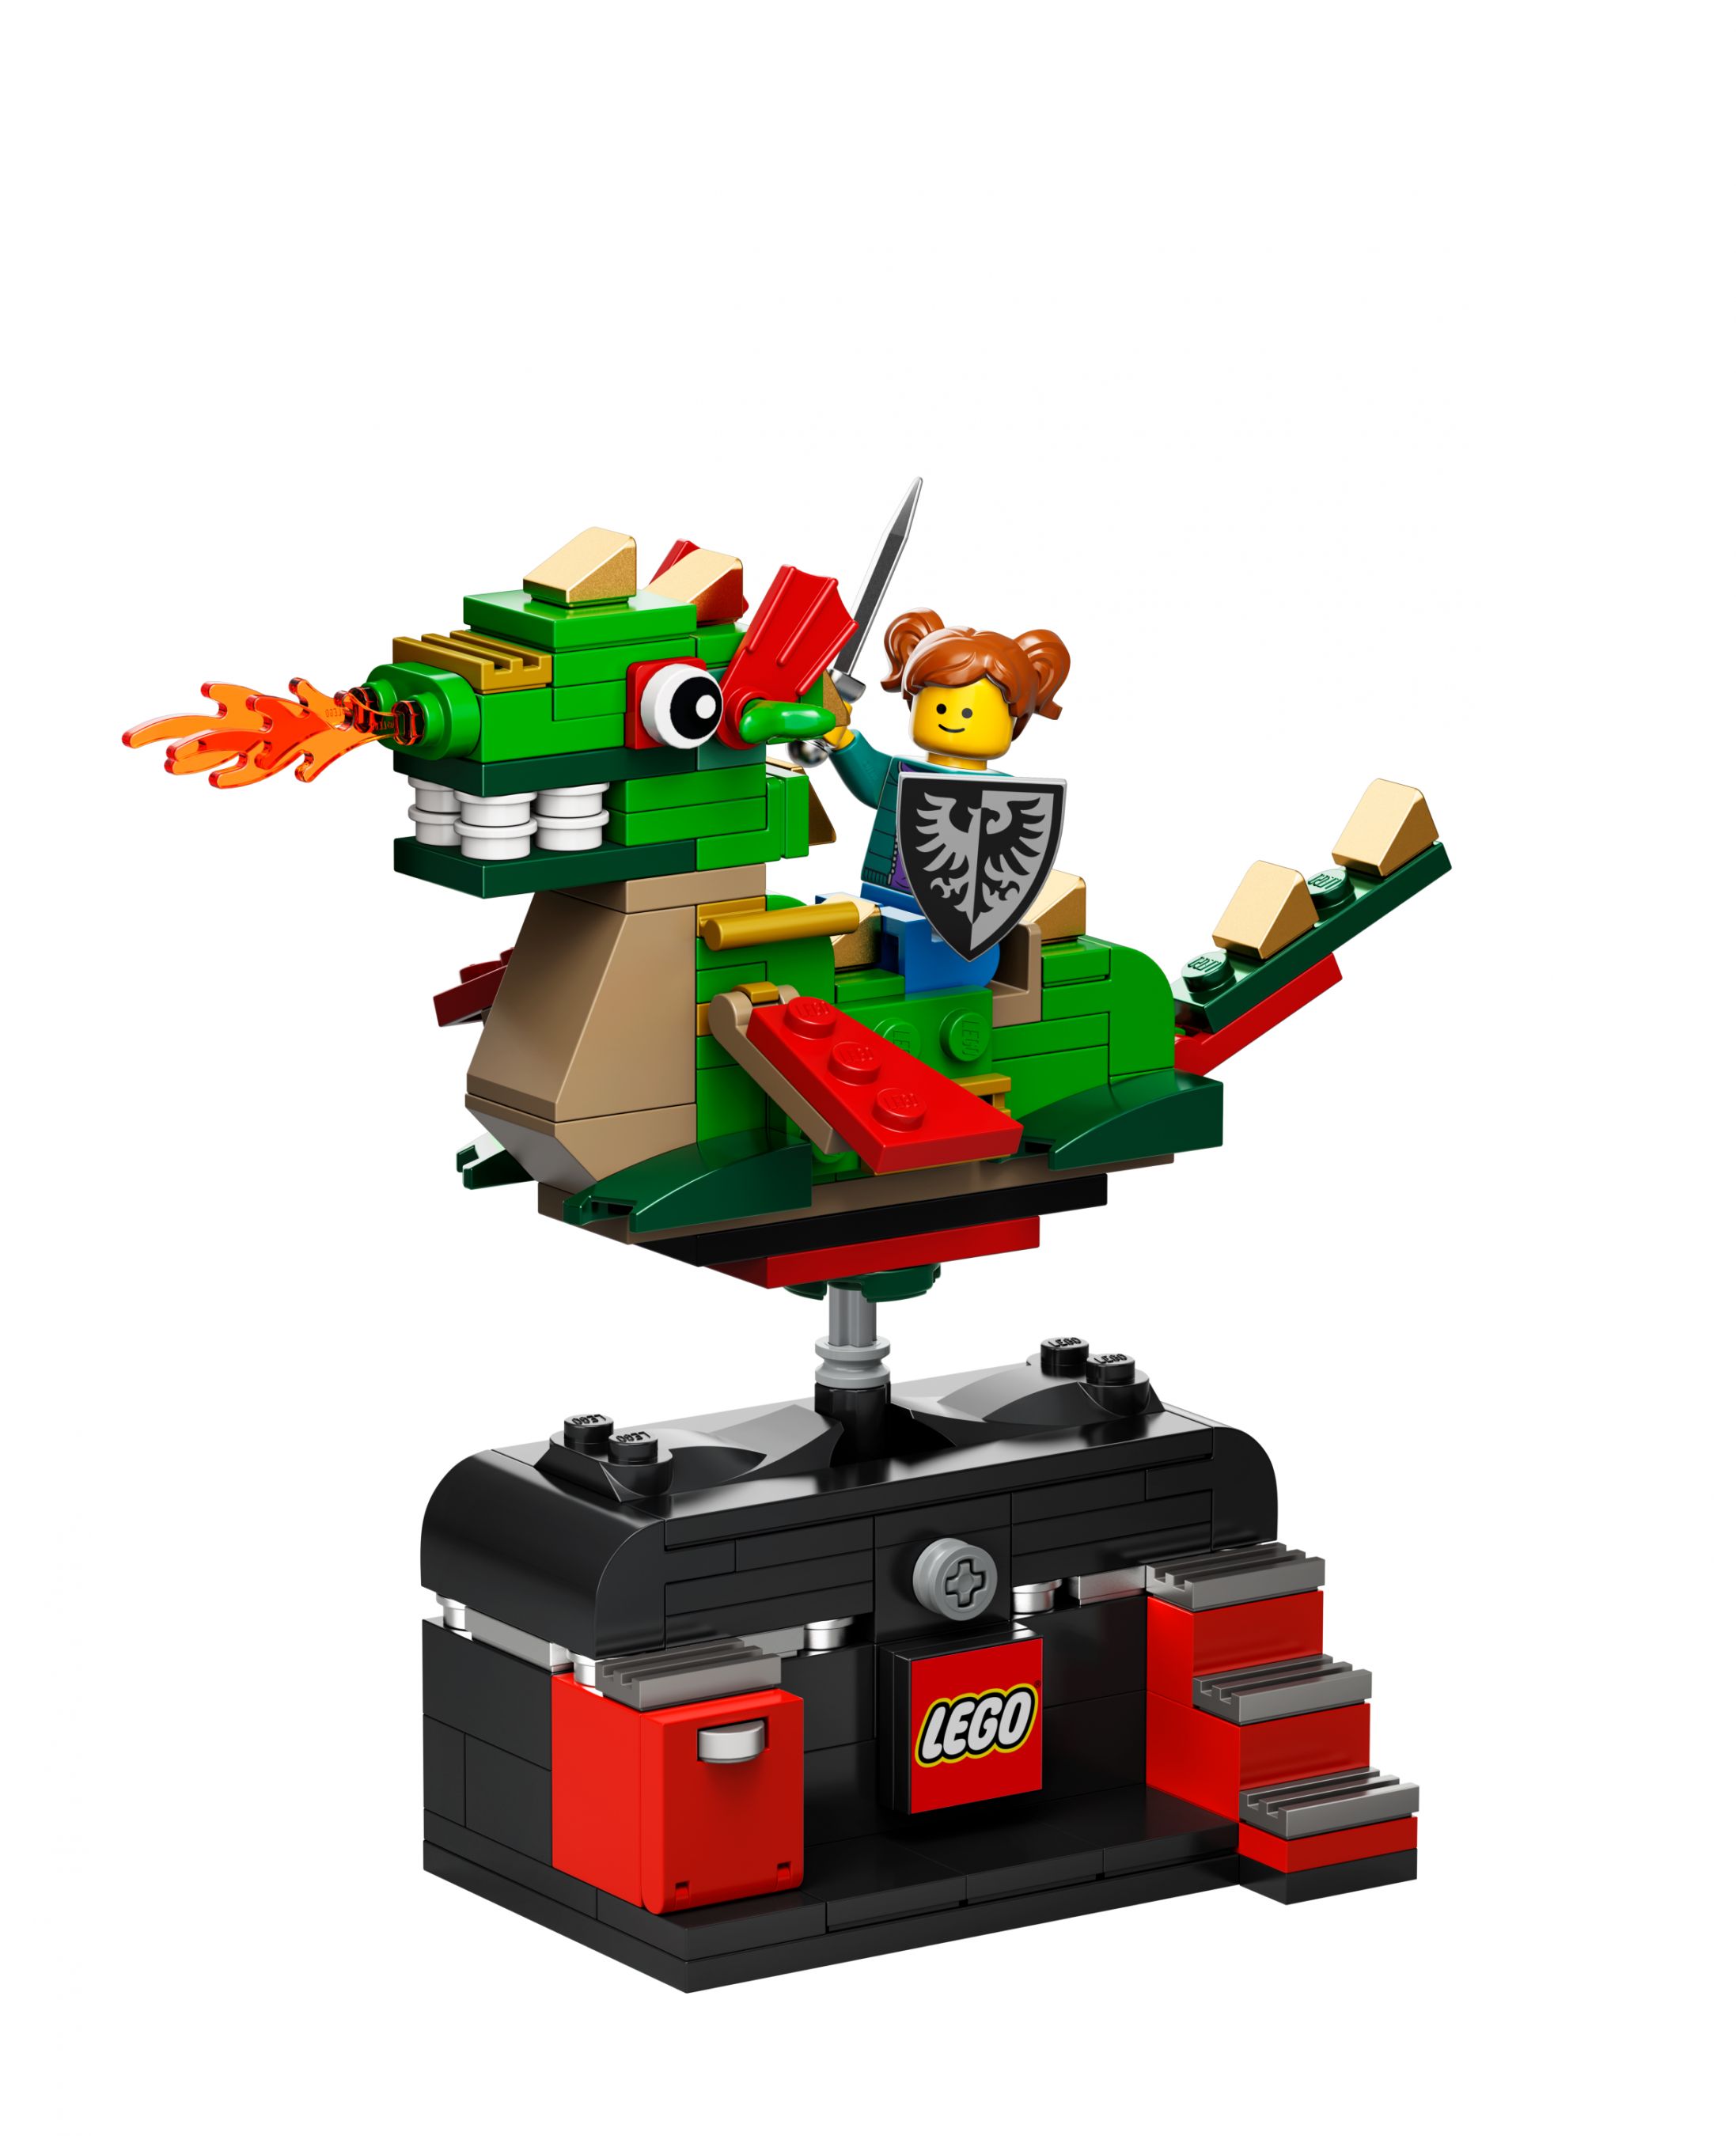 LEGO Promotional 5007428 LR DRAGON ADVENTURE RIDE